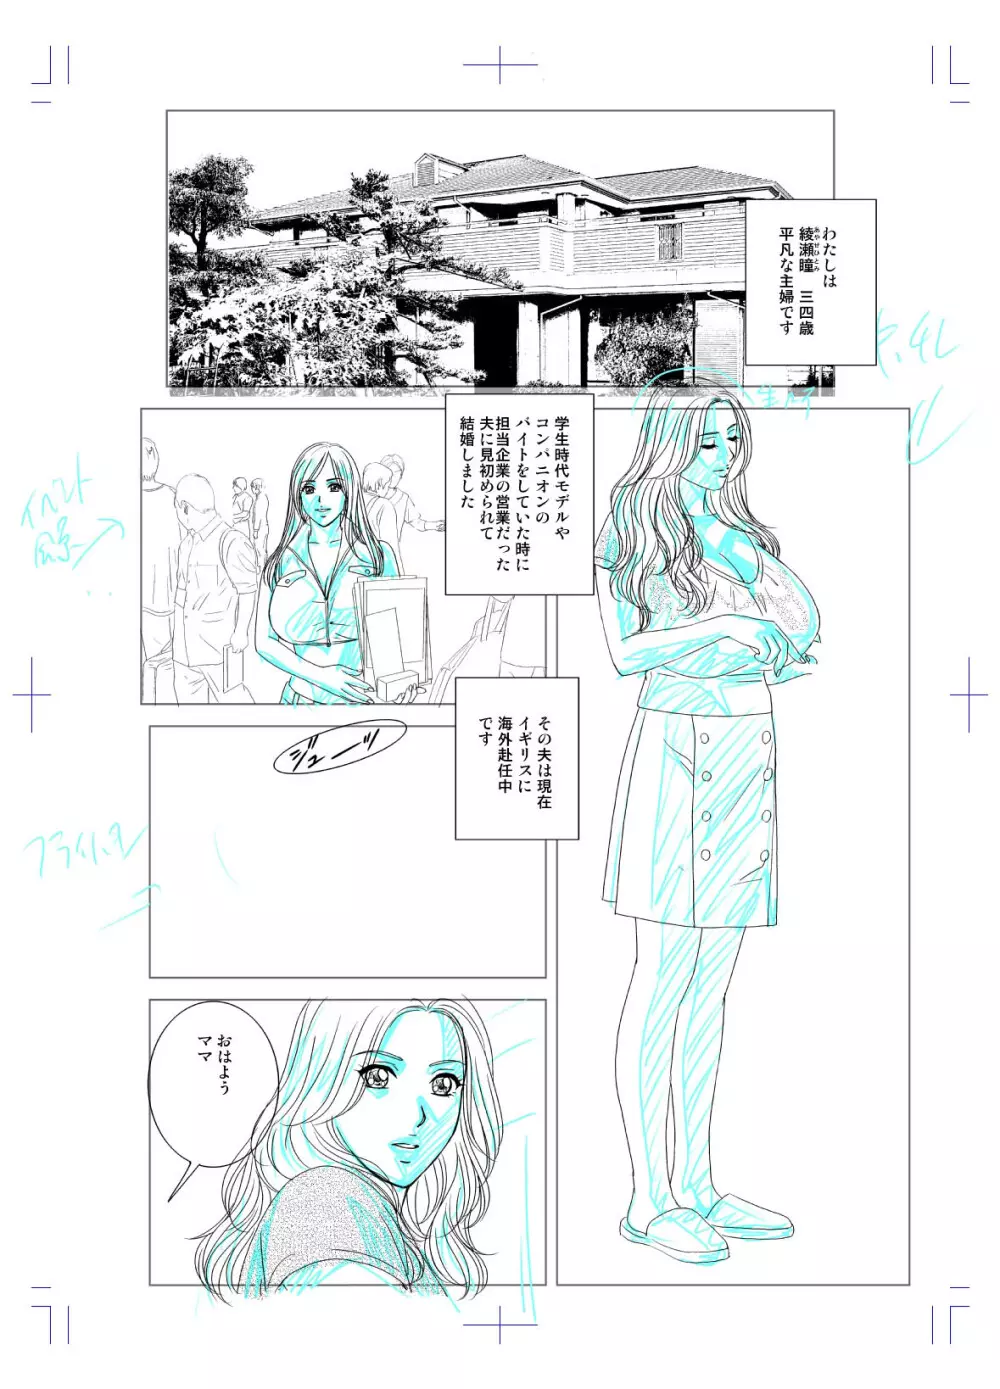 SD-EX 原画集 scene:001~005 3ページ